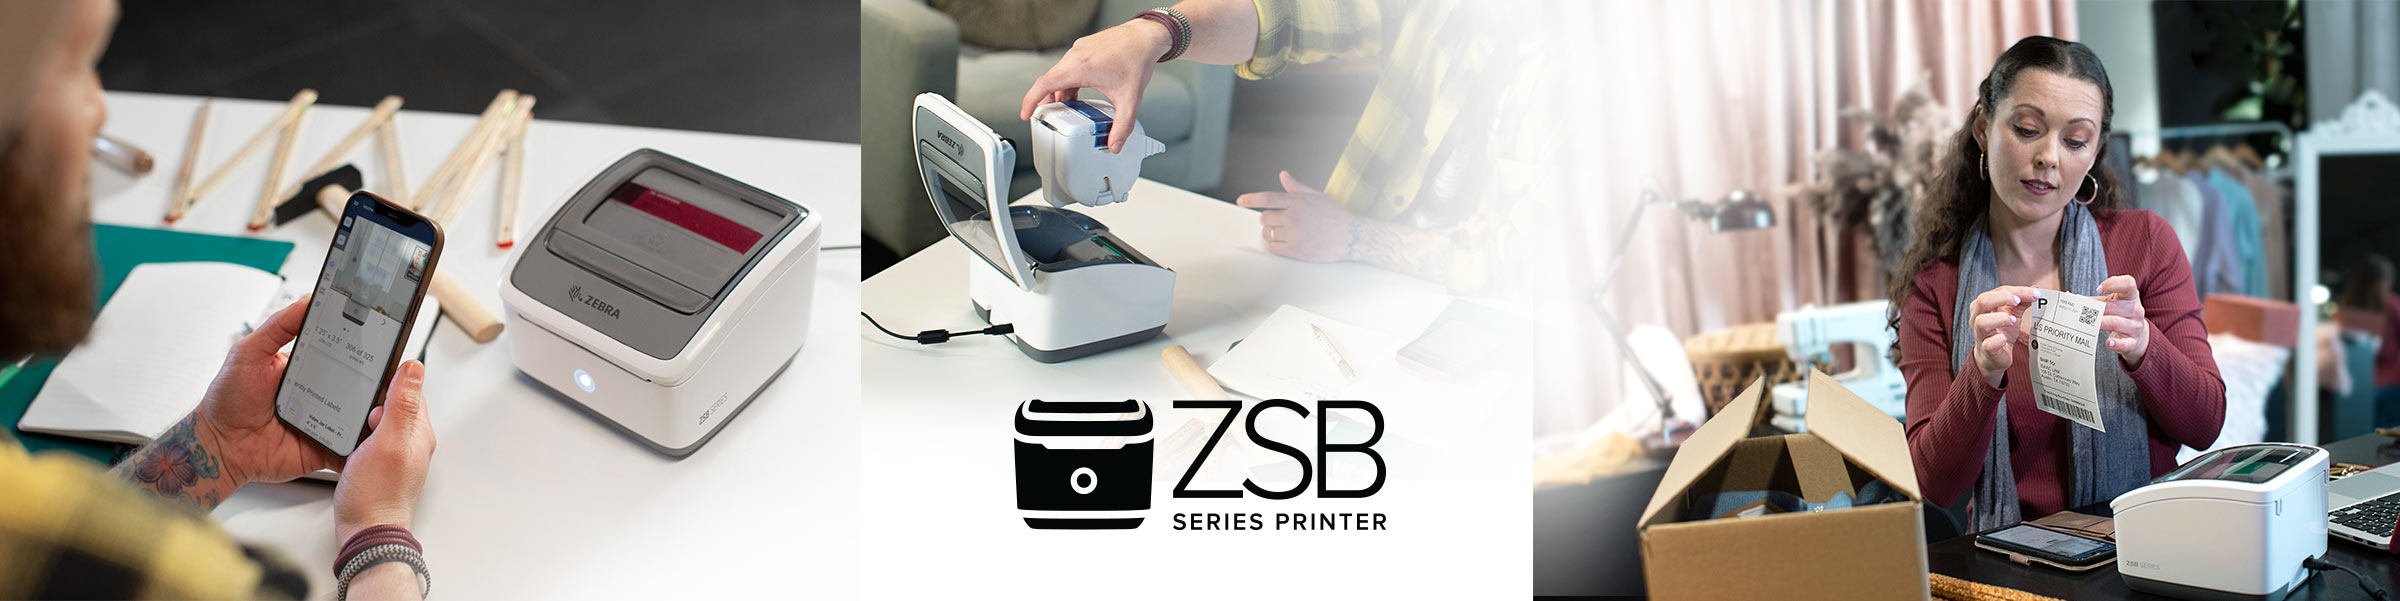 ZSB Series Printer